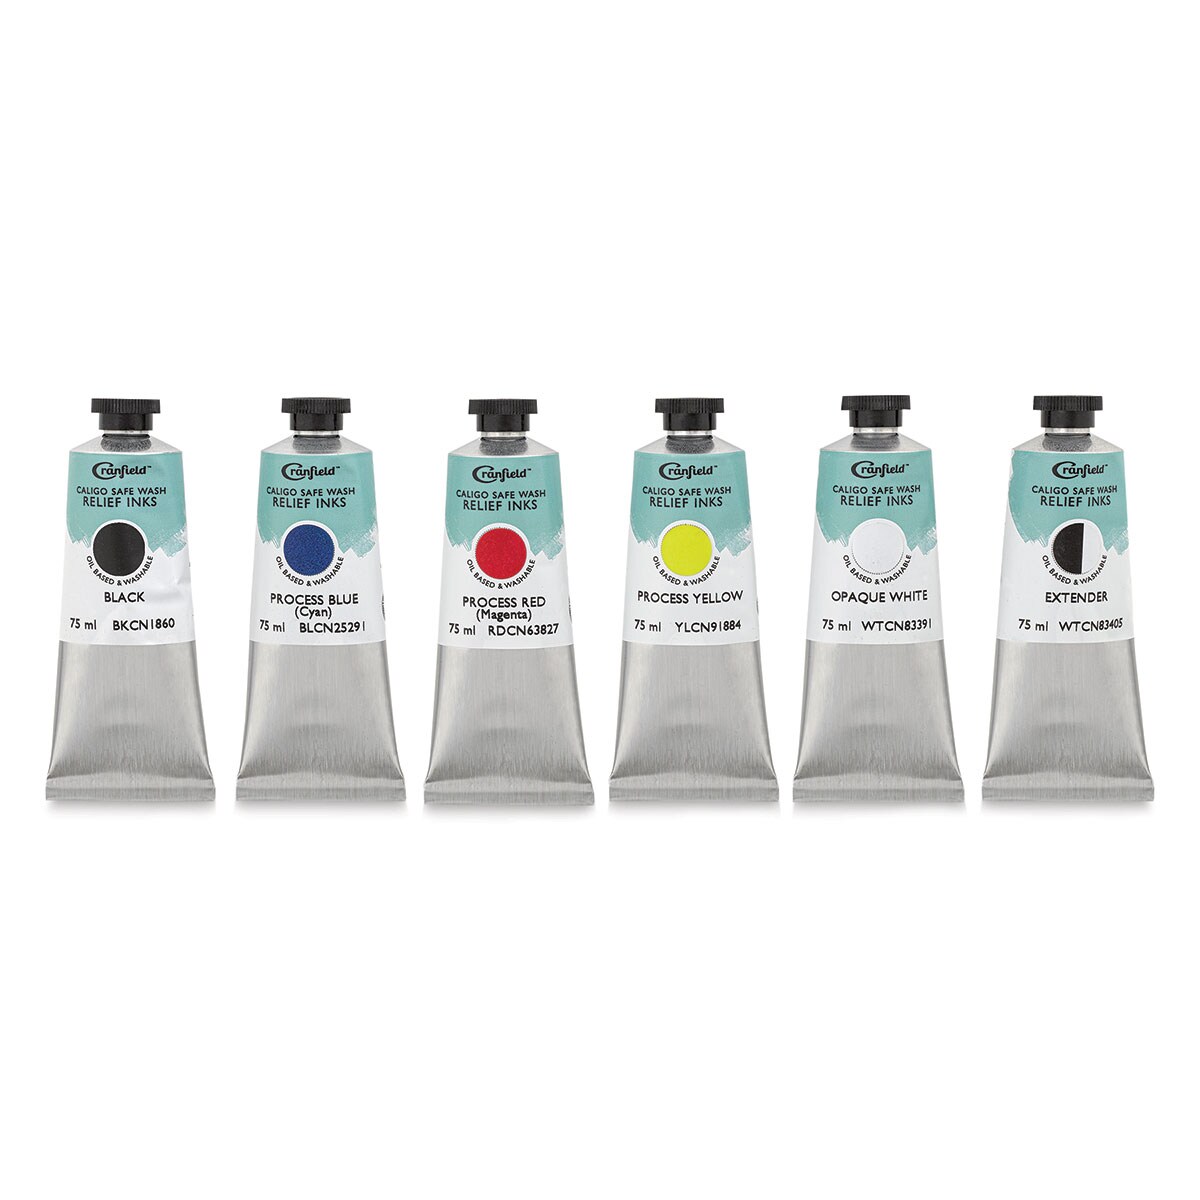 Cranfield Caligo Safe Wash Relief Ink - Set of 6, Assorted Colors, 75 ml, Tubes